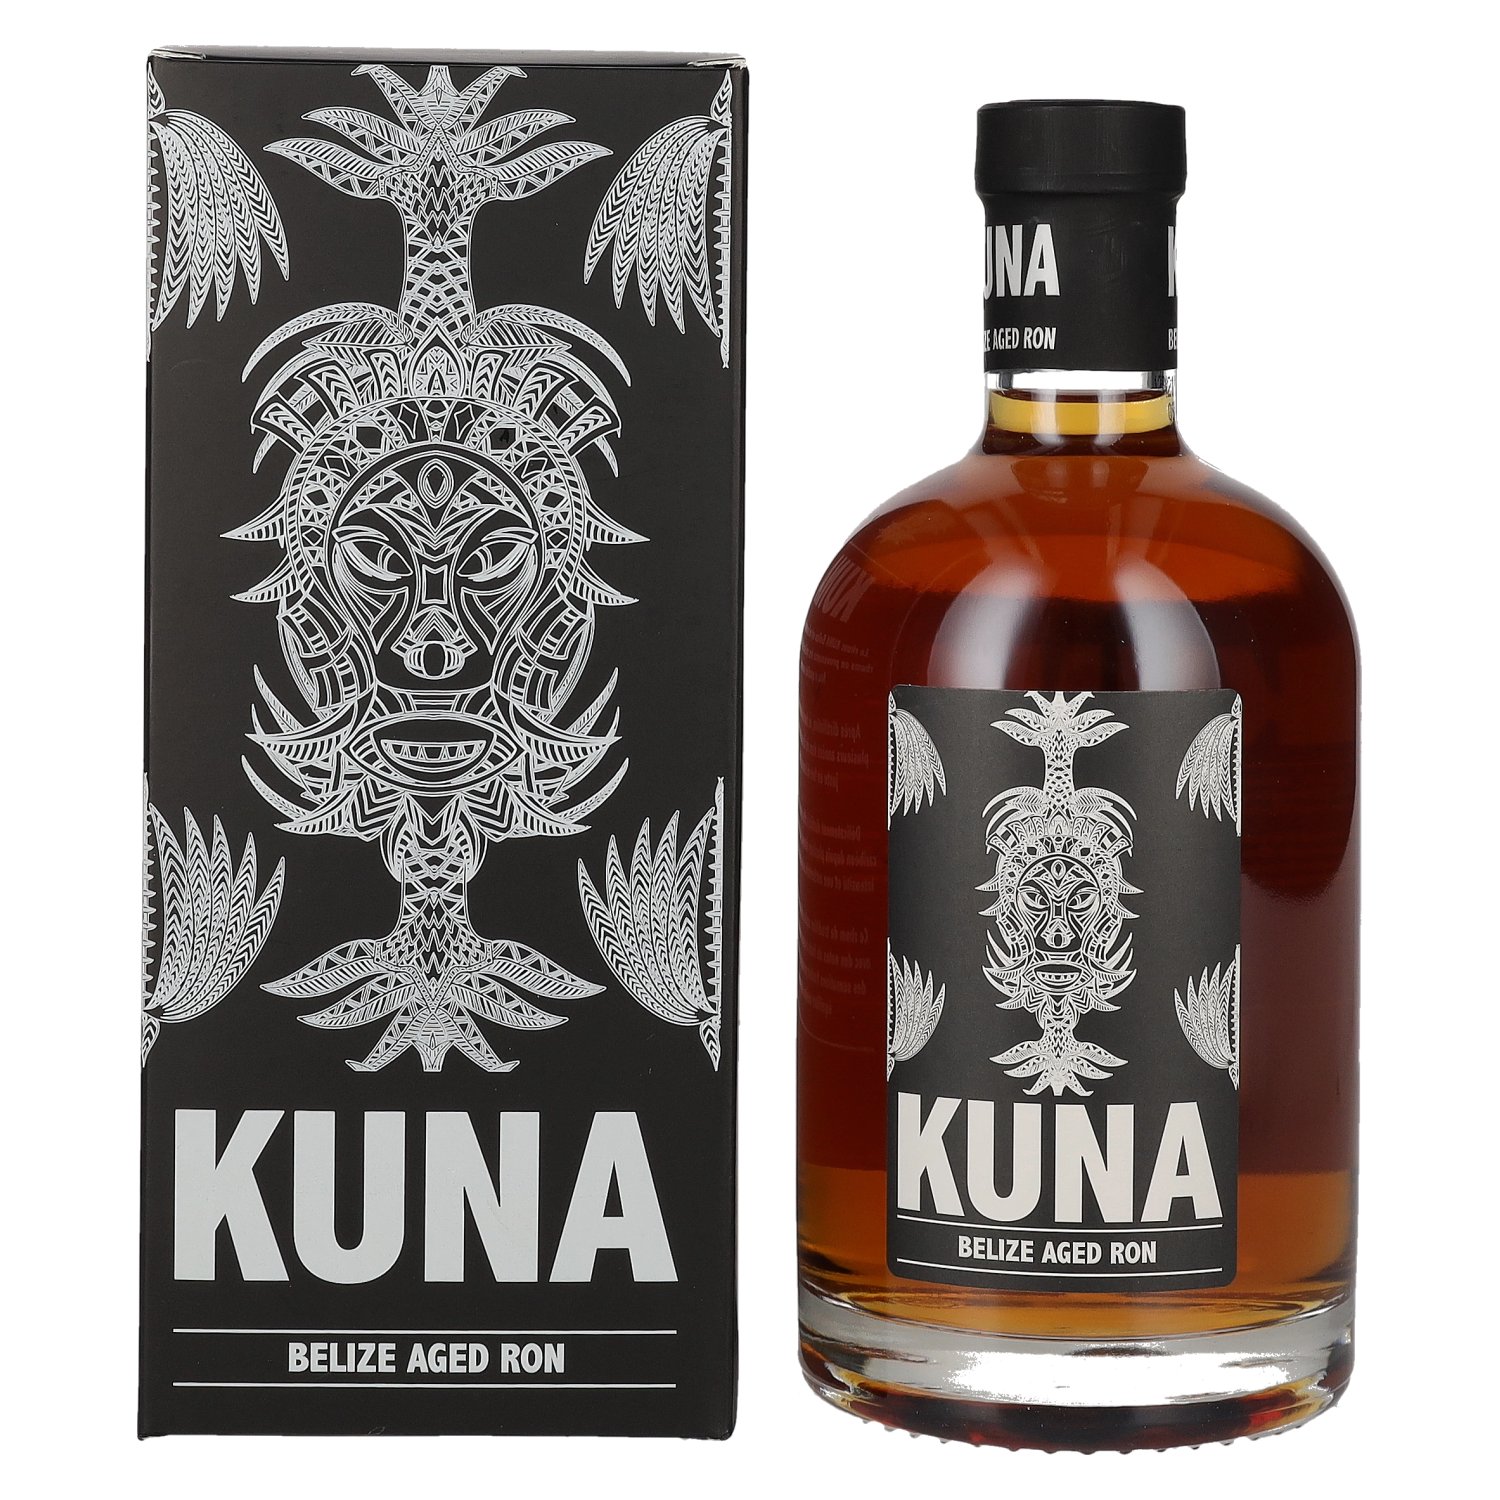 Kuna Belize Aged Ron 40% Vol. 0,7l in Giftbox